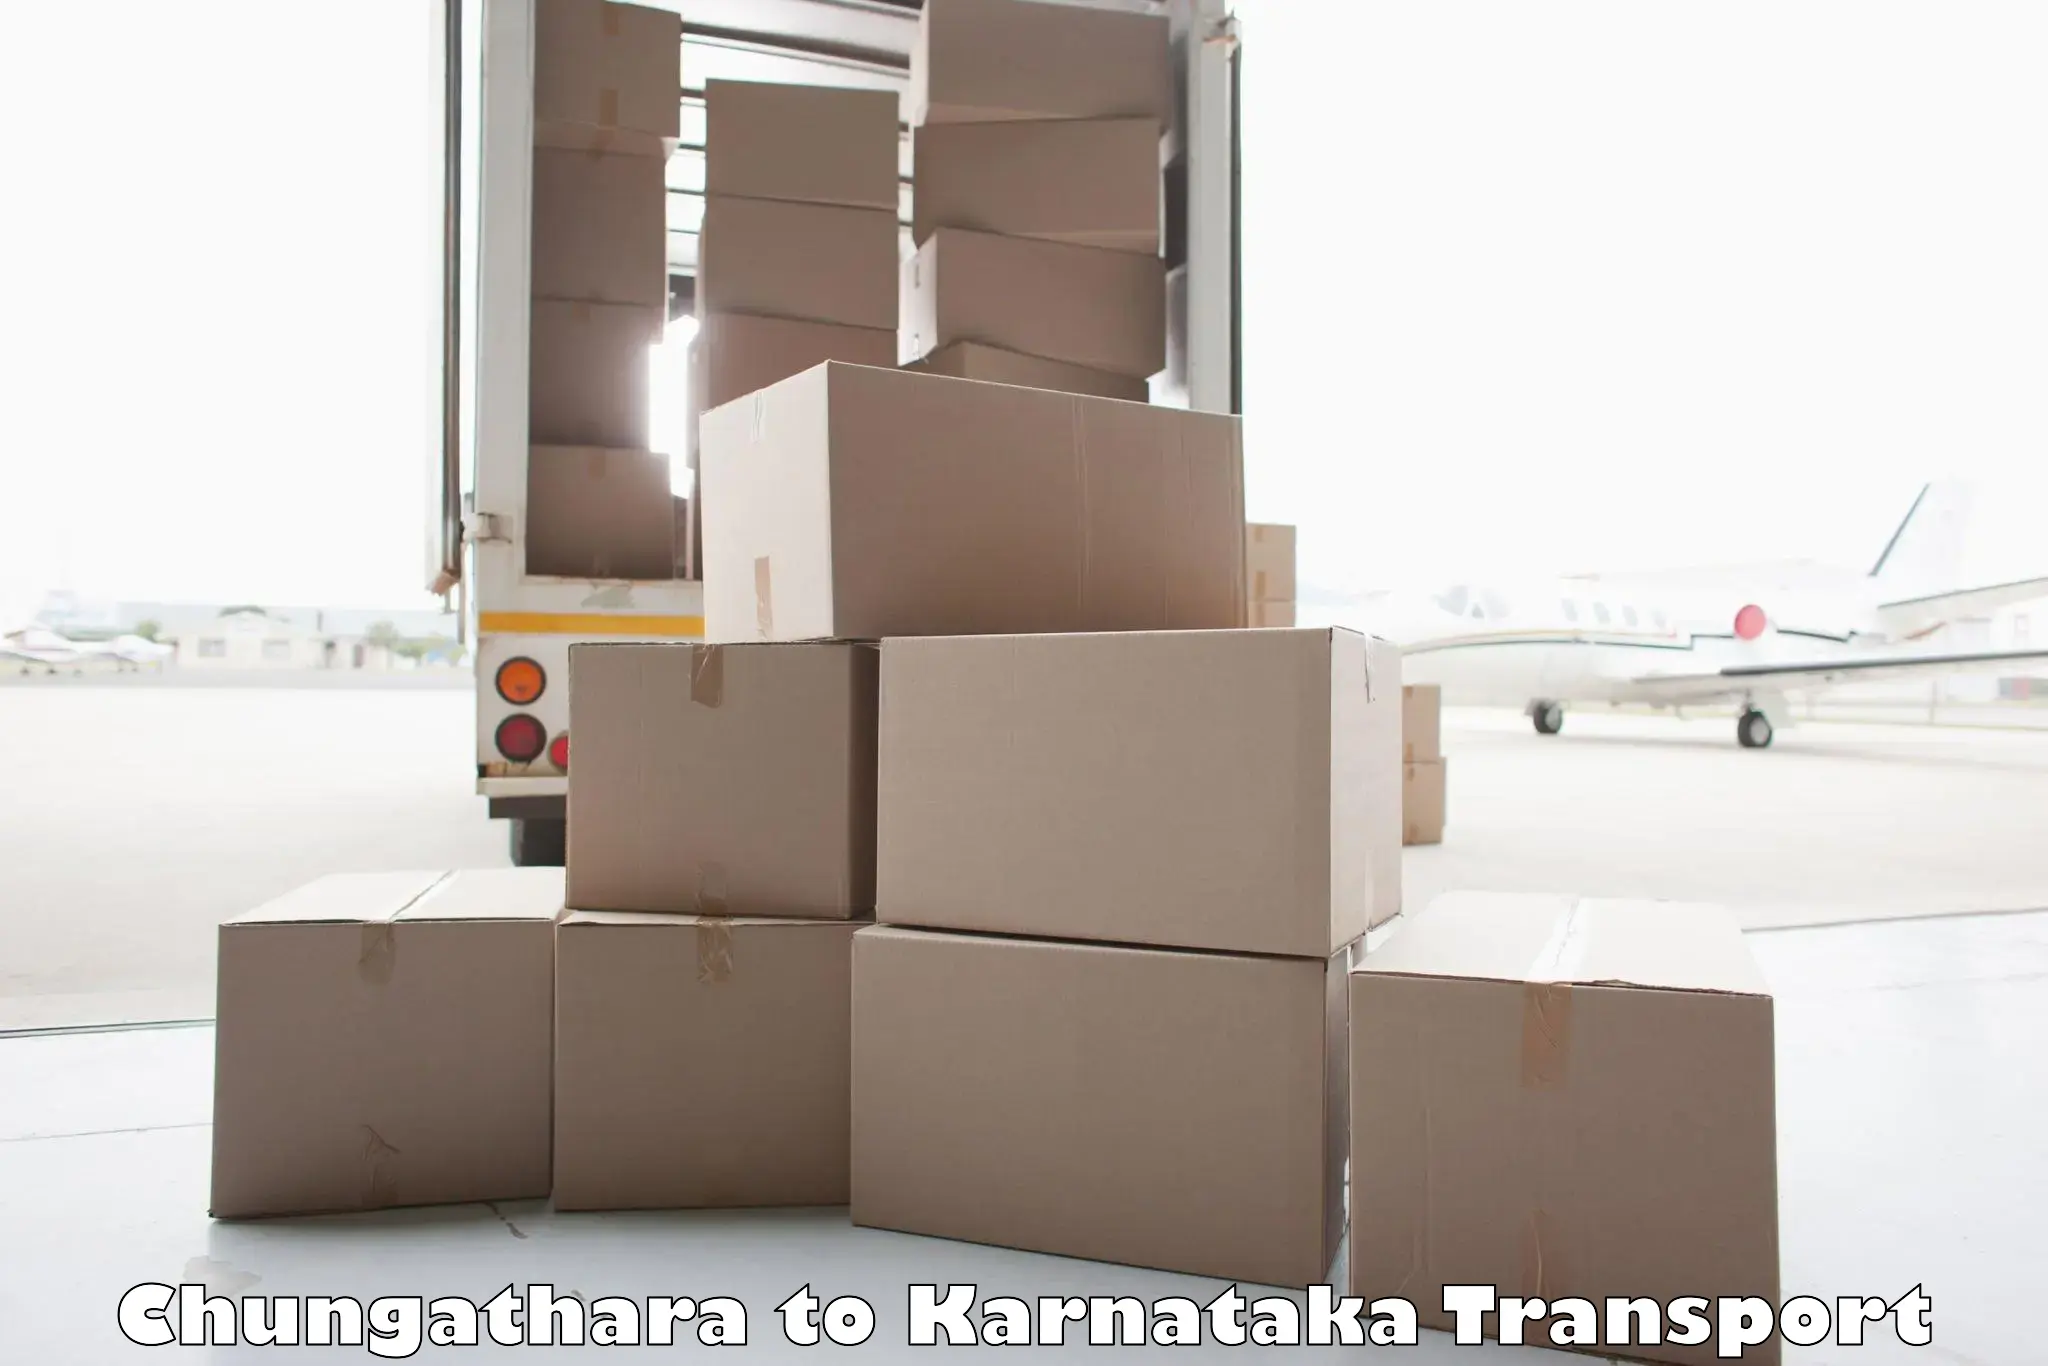 Truck transport companies in India Chungathara to Ittigi